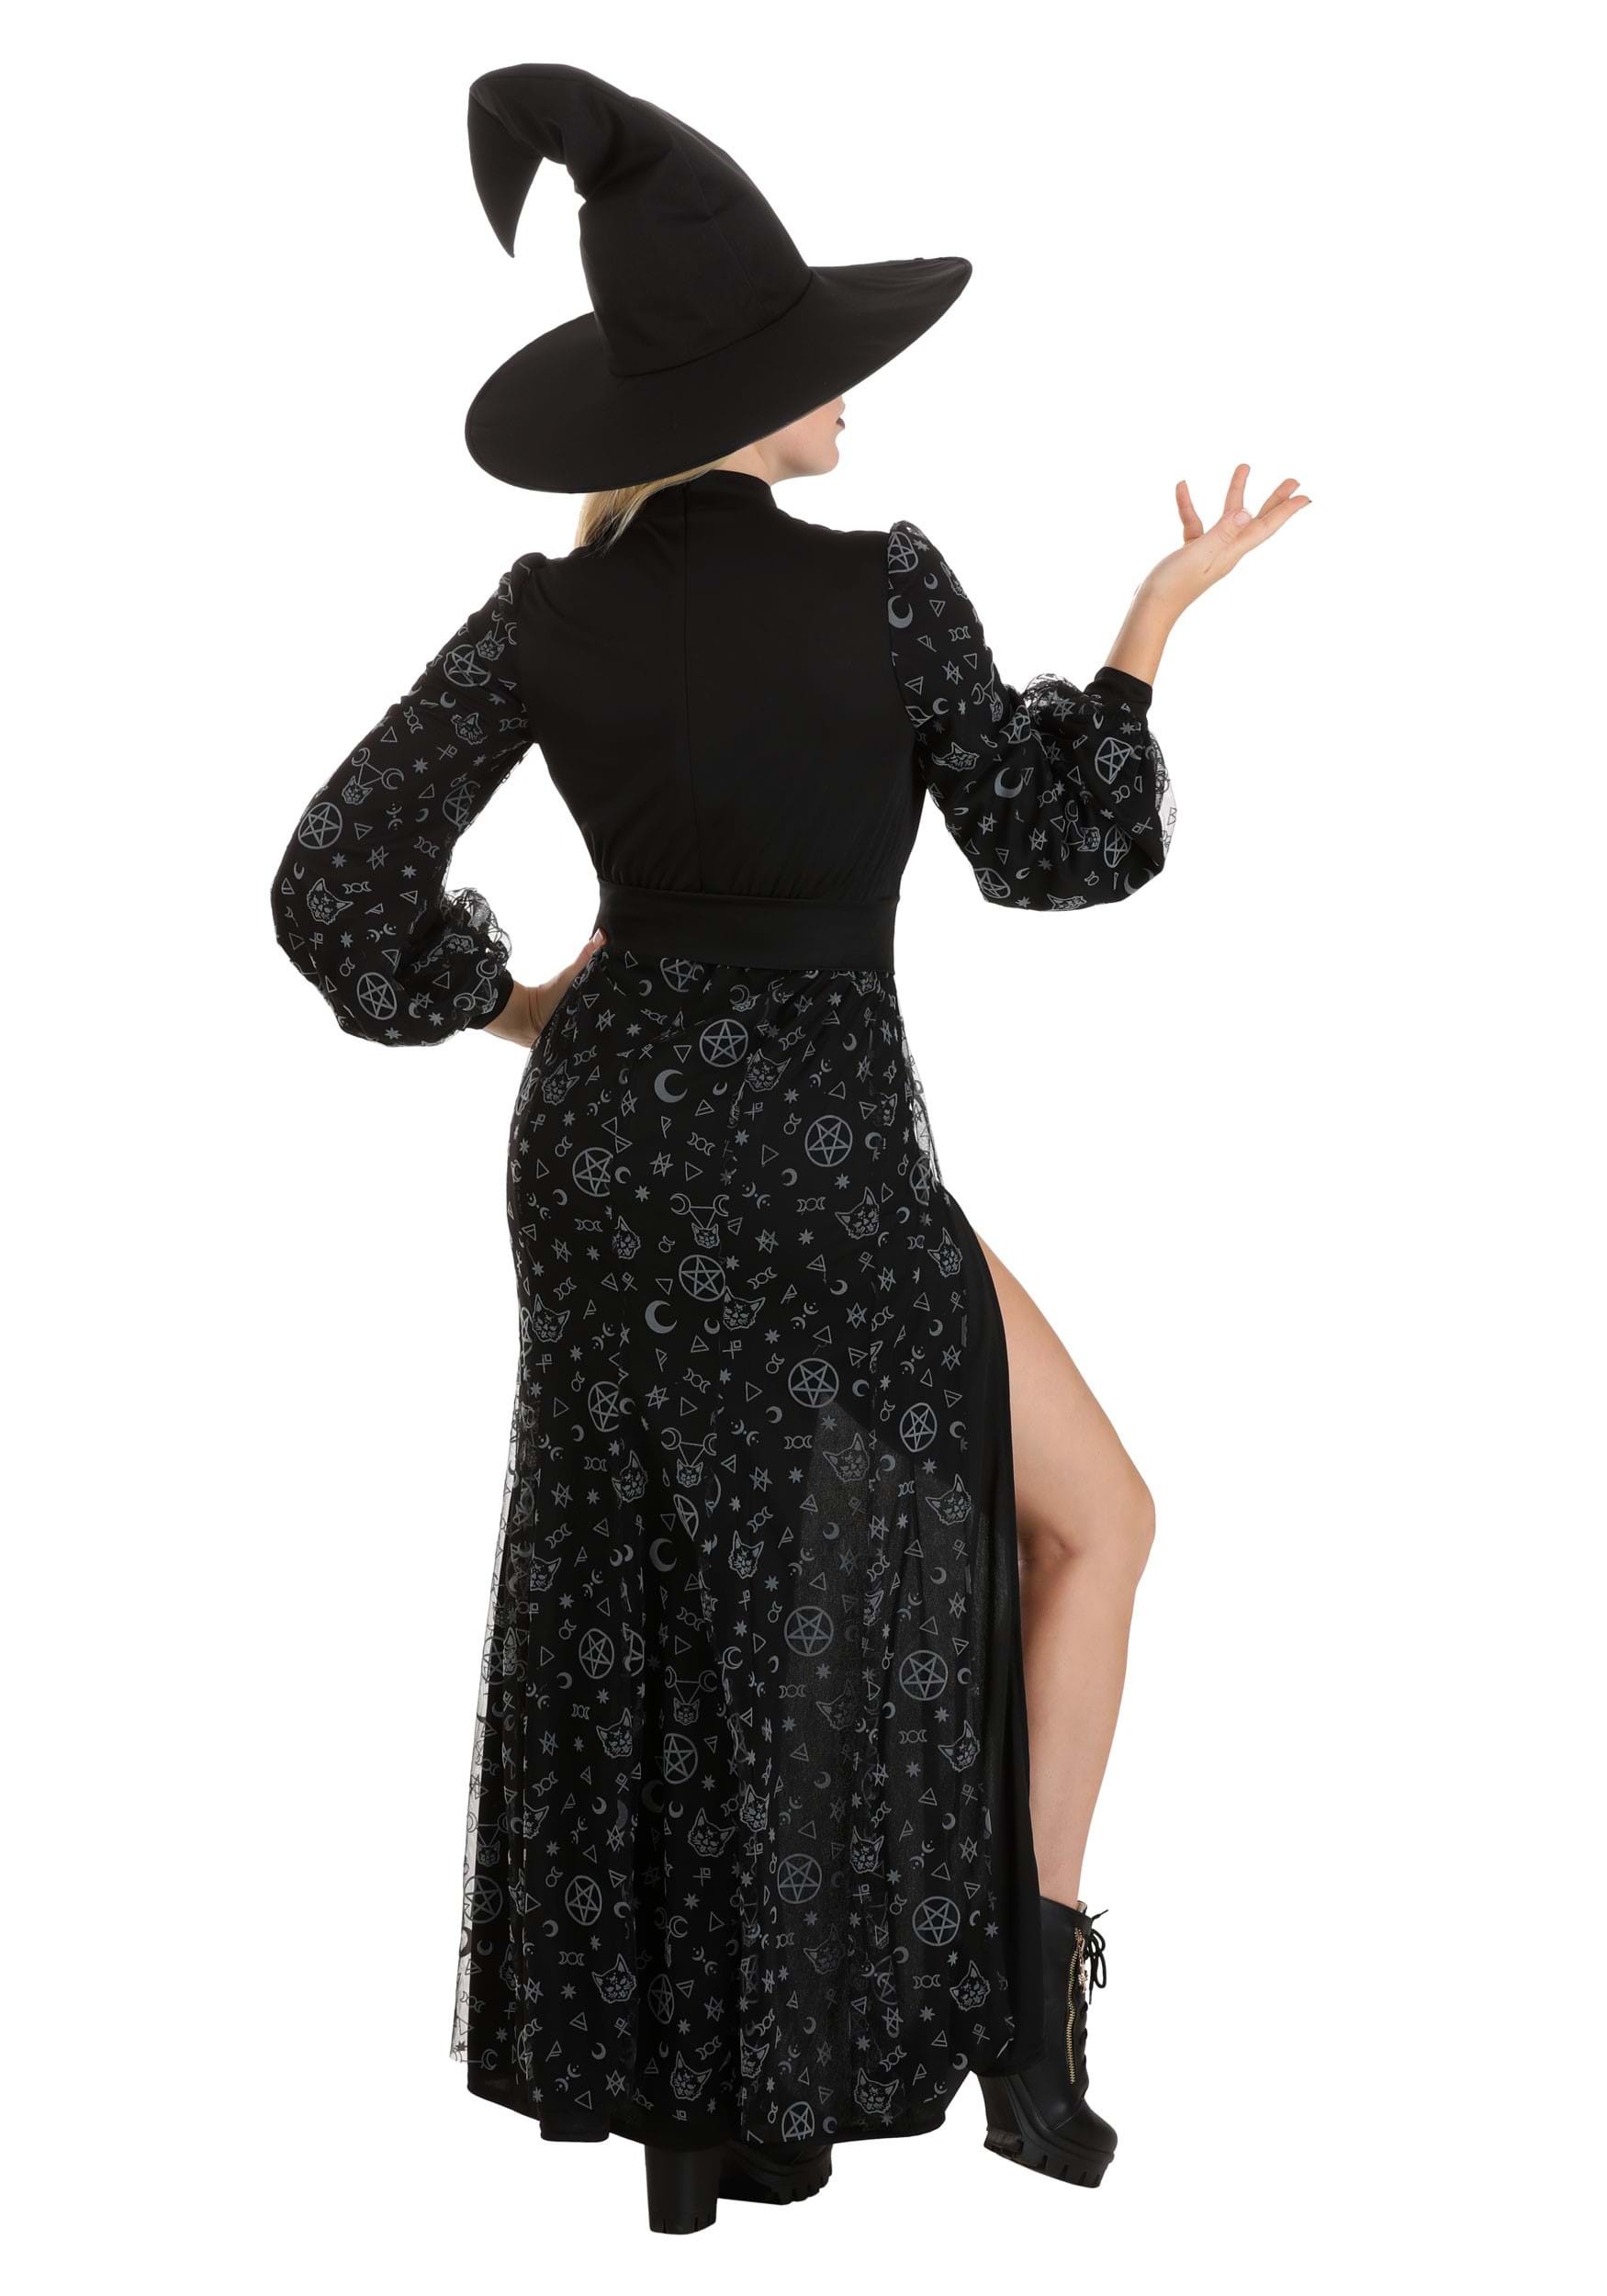 Retrograde Witch Women's Costume